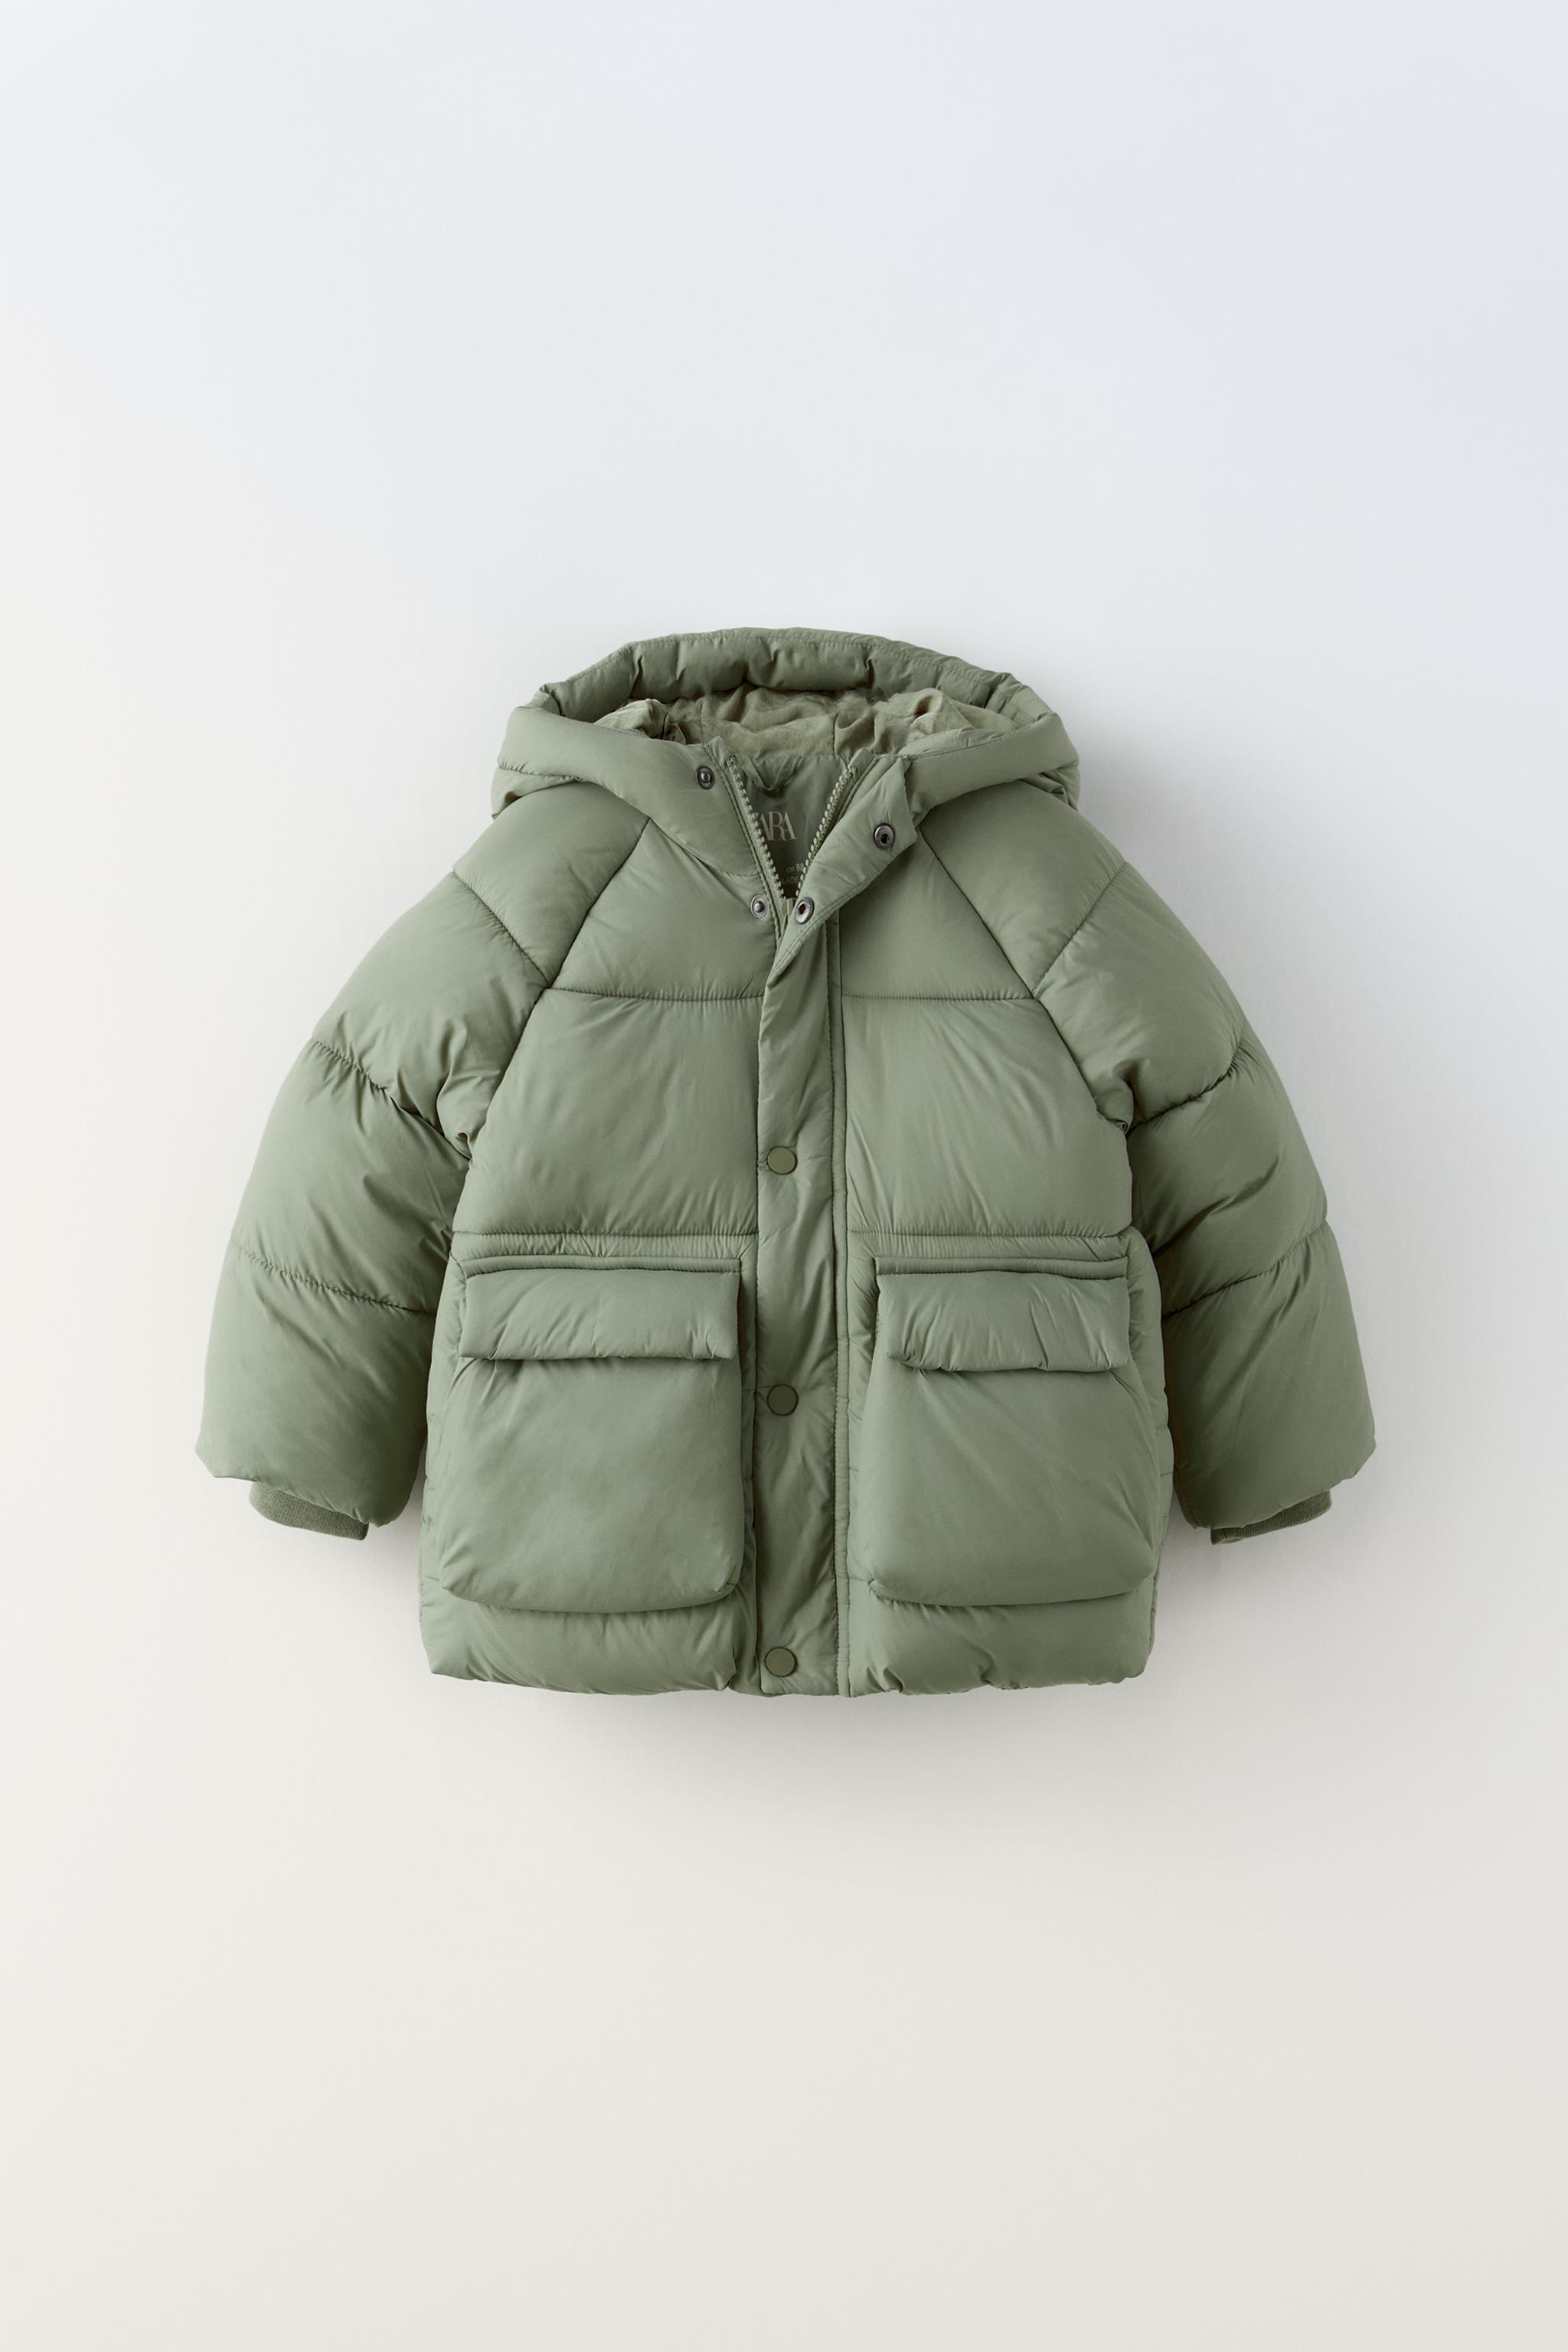 El abrigo tipo plumas anti frio más potente e ideal de Zara